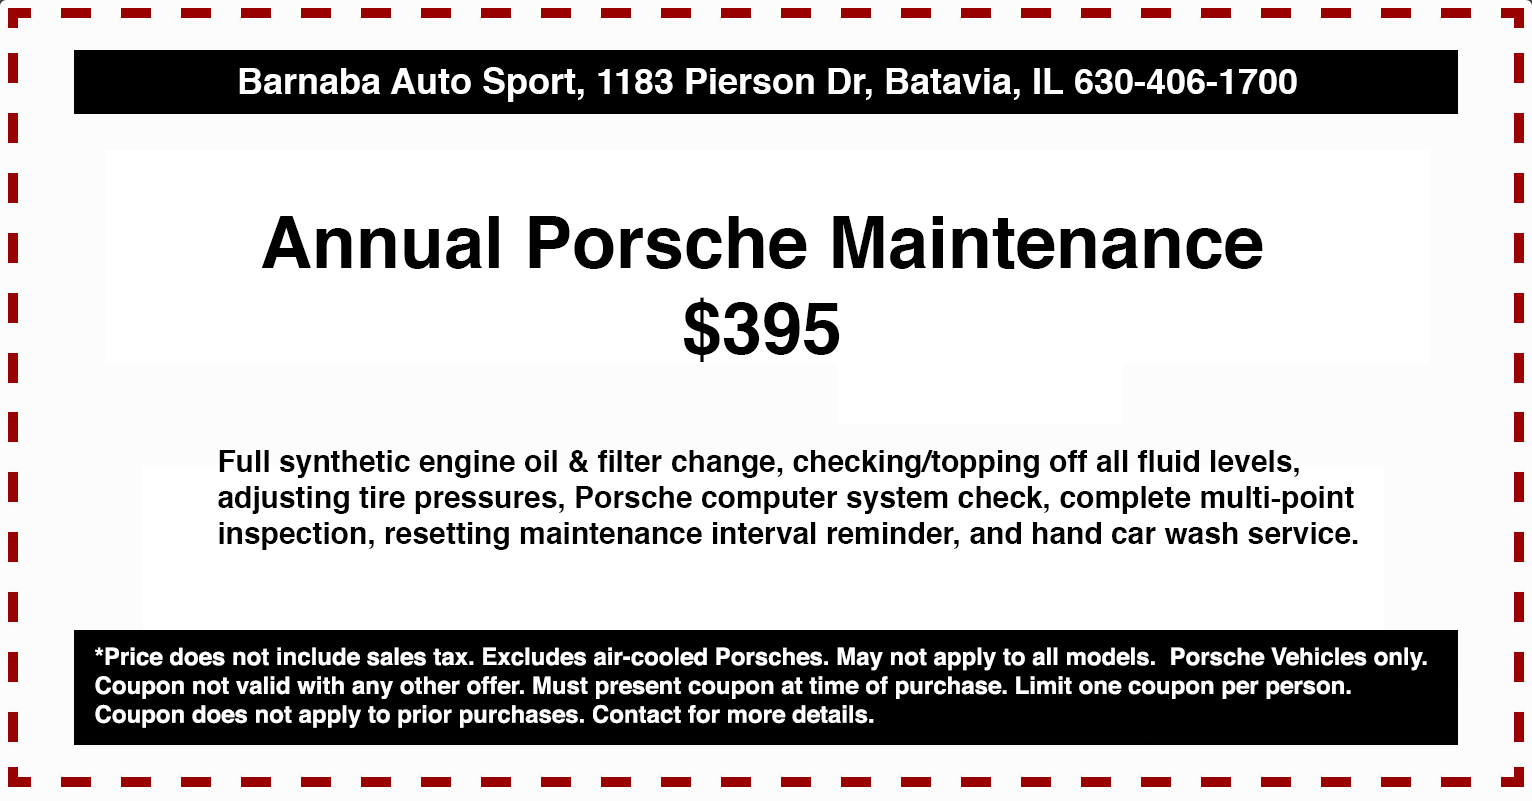 Annual Porsche Maintenance